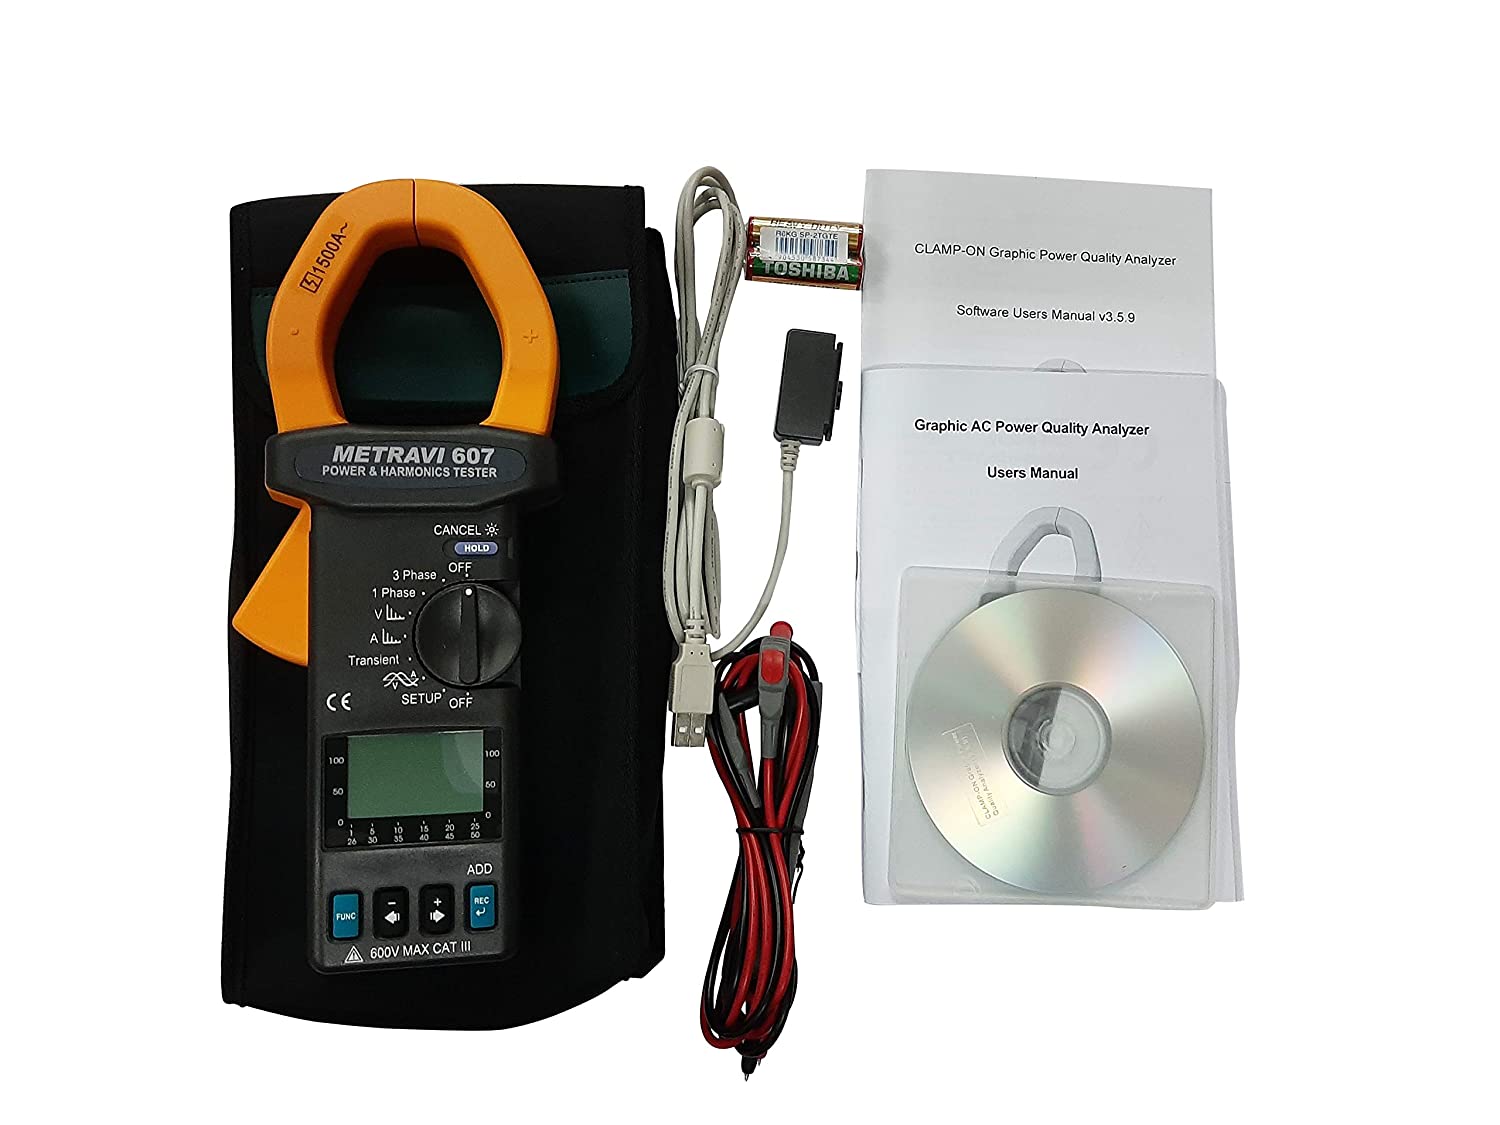 Metravi 607 Digital Clamp On Power Meter for Power Quality & Harmonic Analysis